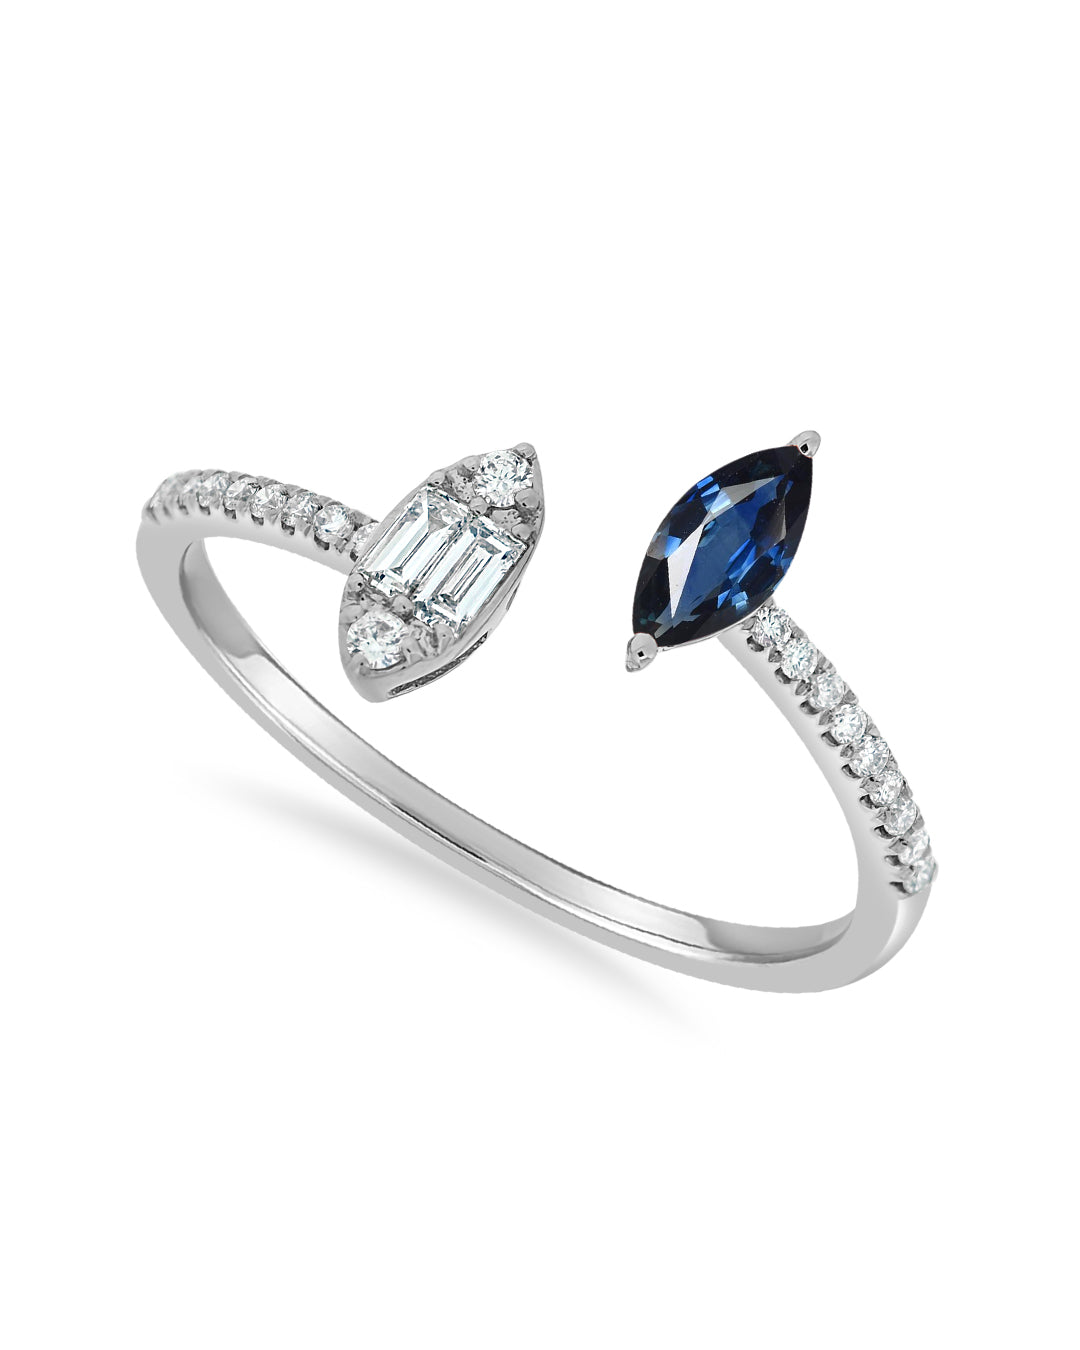 Liz Marquise Sapphire Diamond Ring